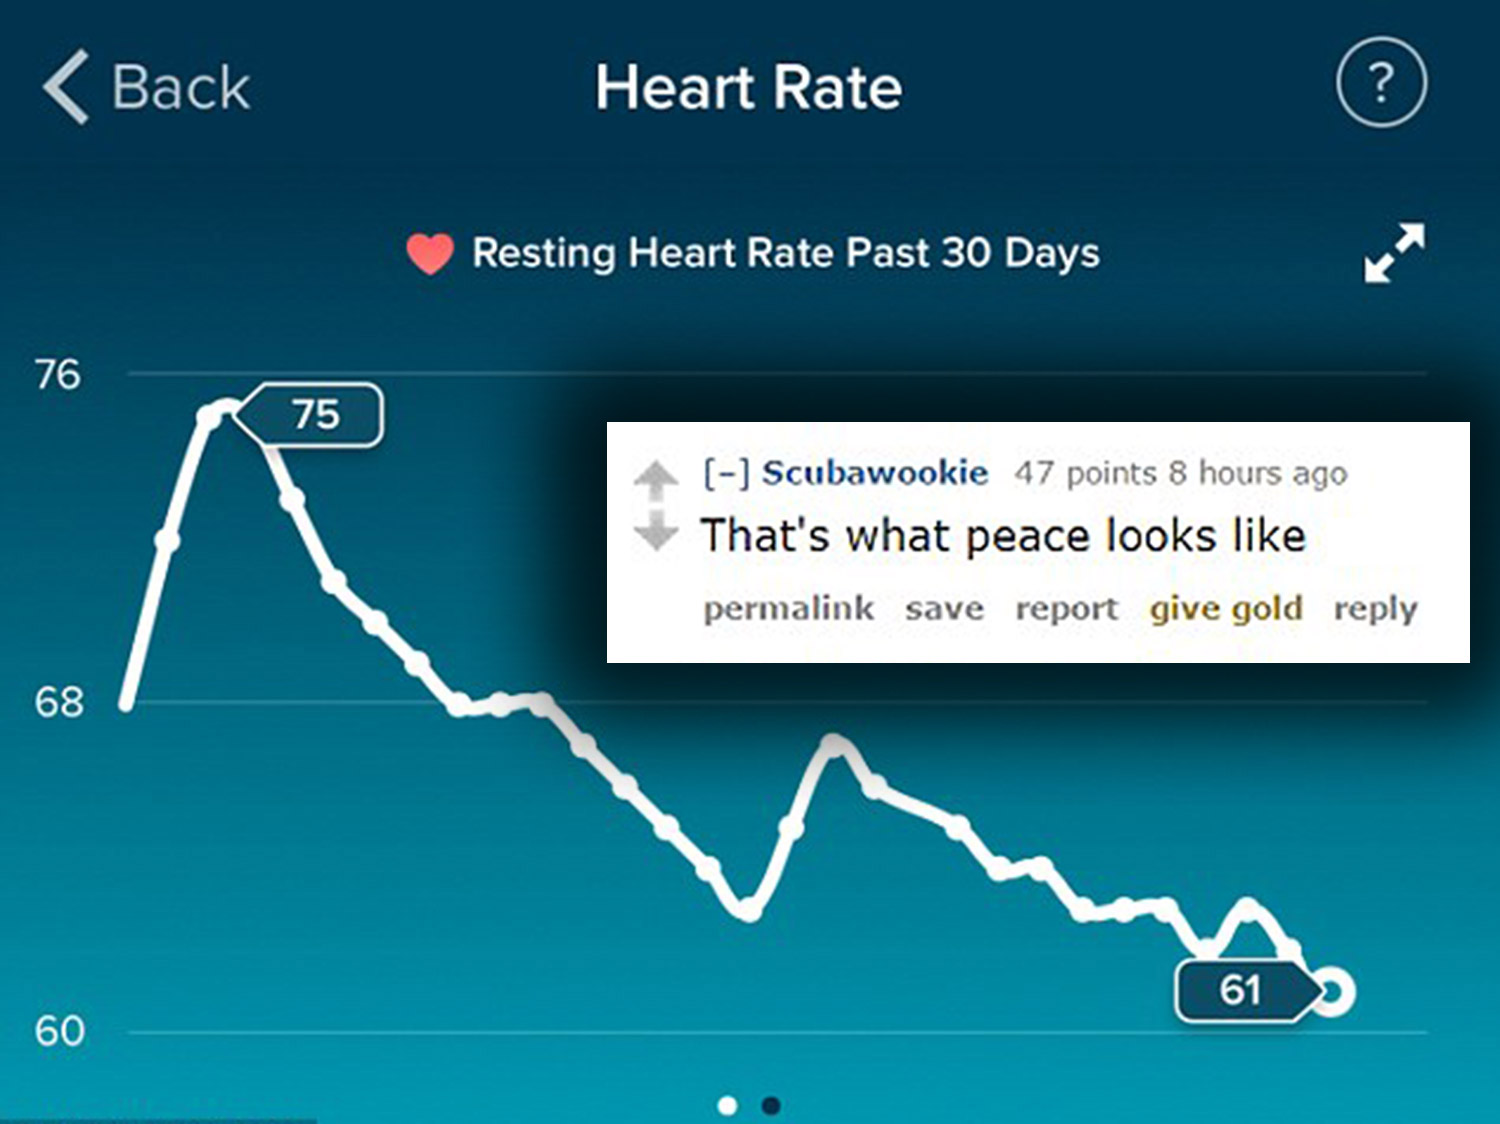 Dræbte vurdere Invitere Man's Heart Rate Drops after Breakup says Fitbit | Digital Trends